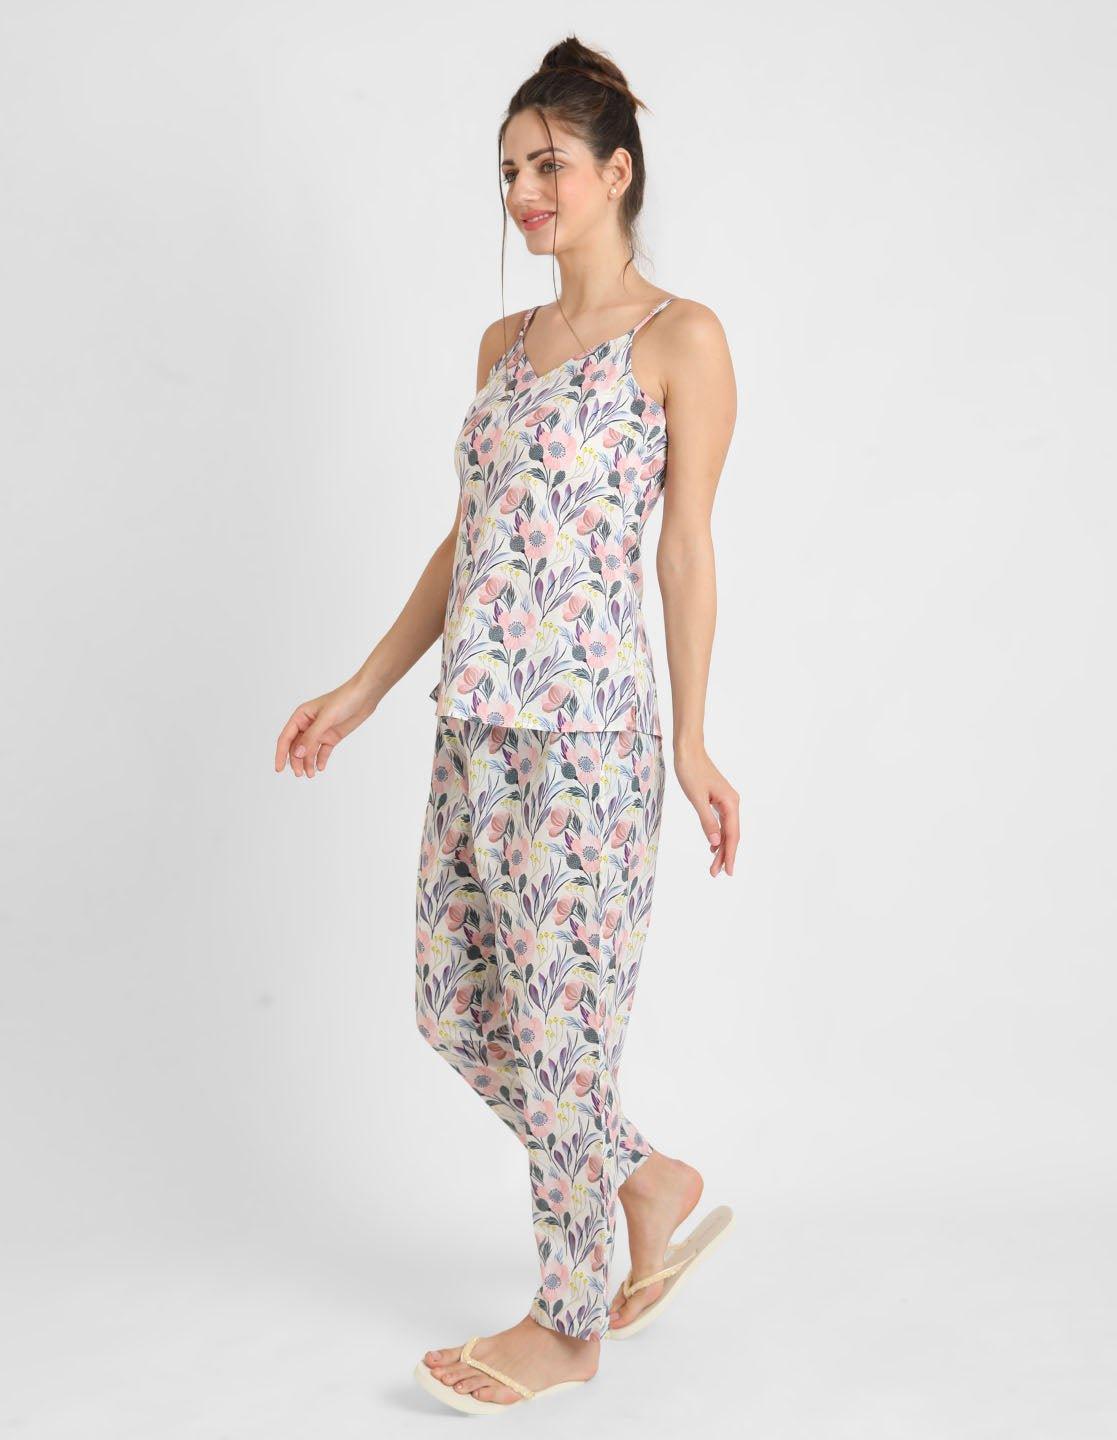 Mystic Floral Singlet Pyjama Set for Women